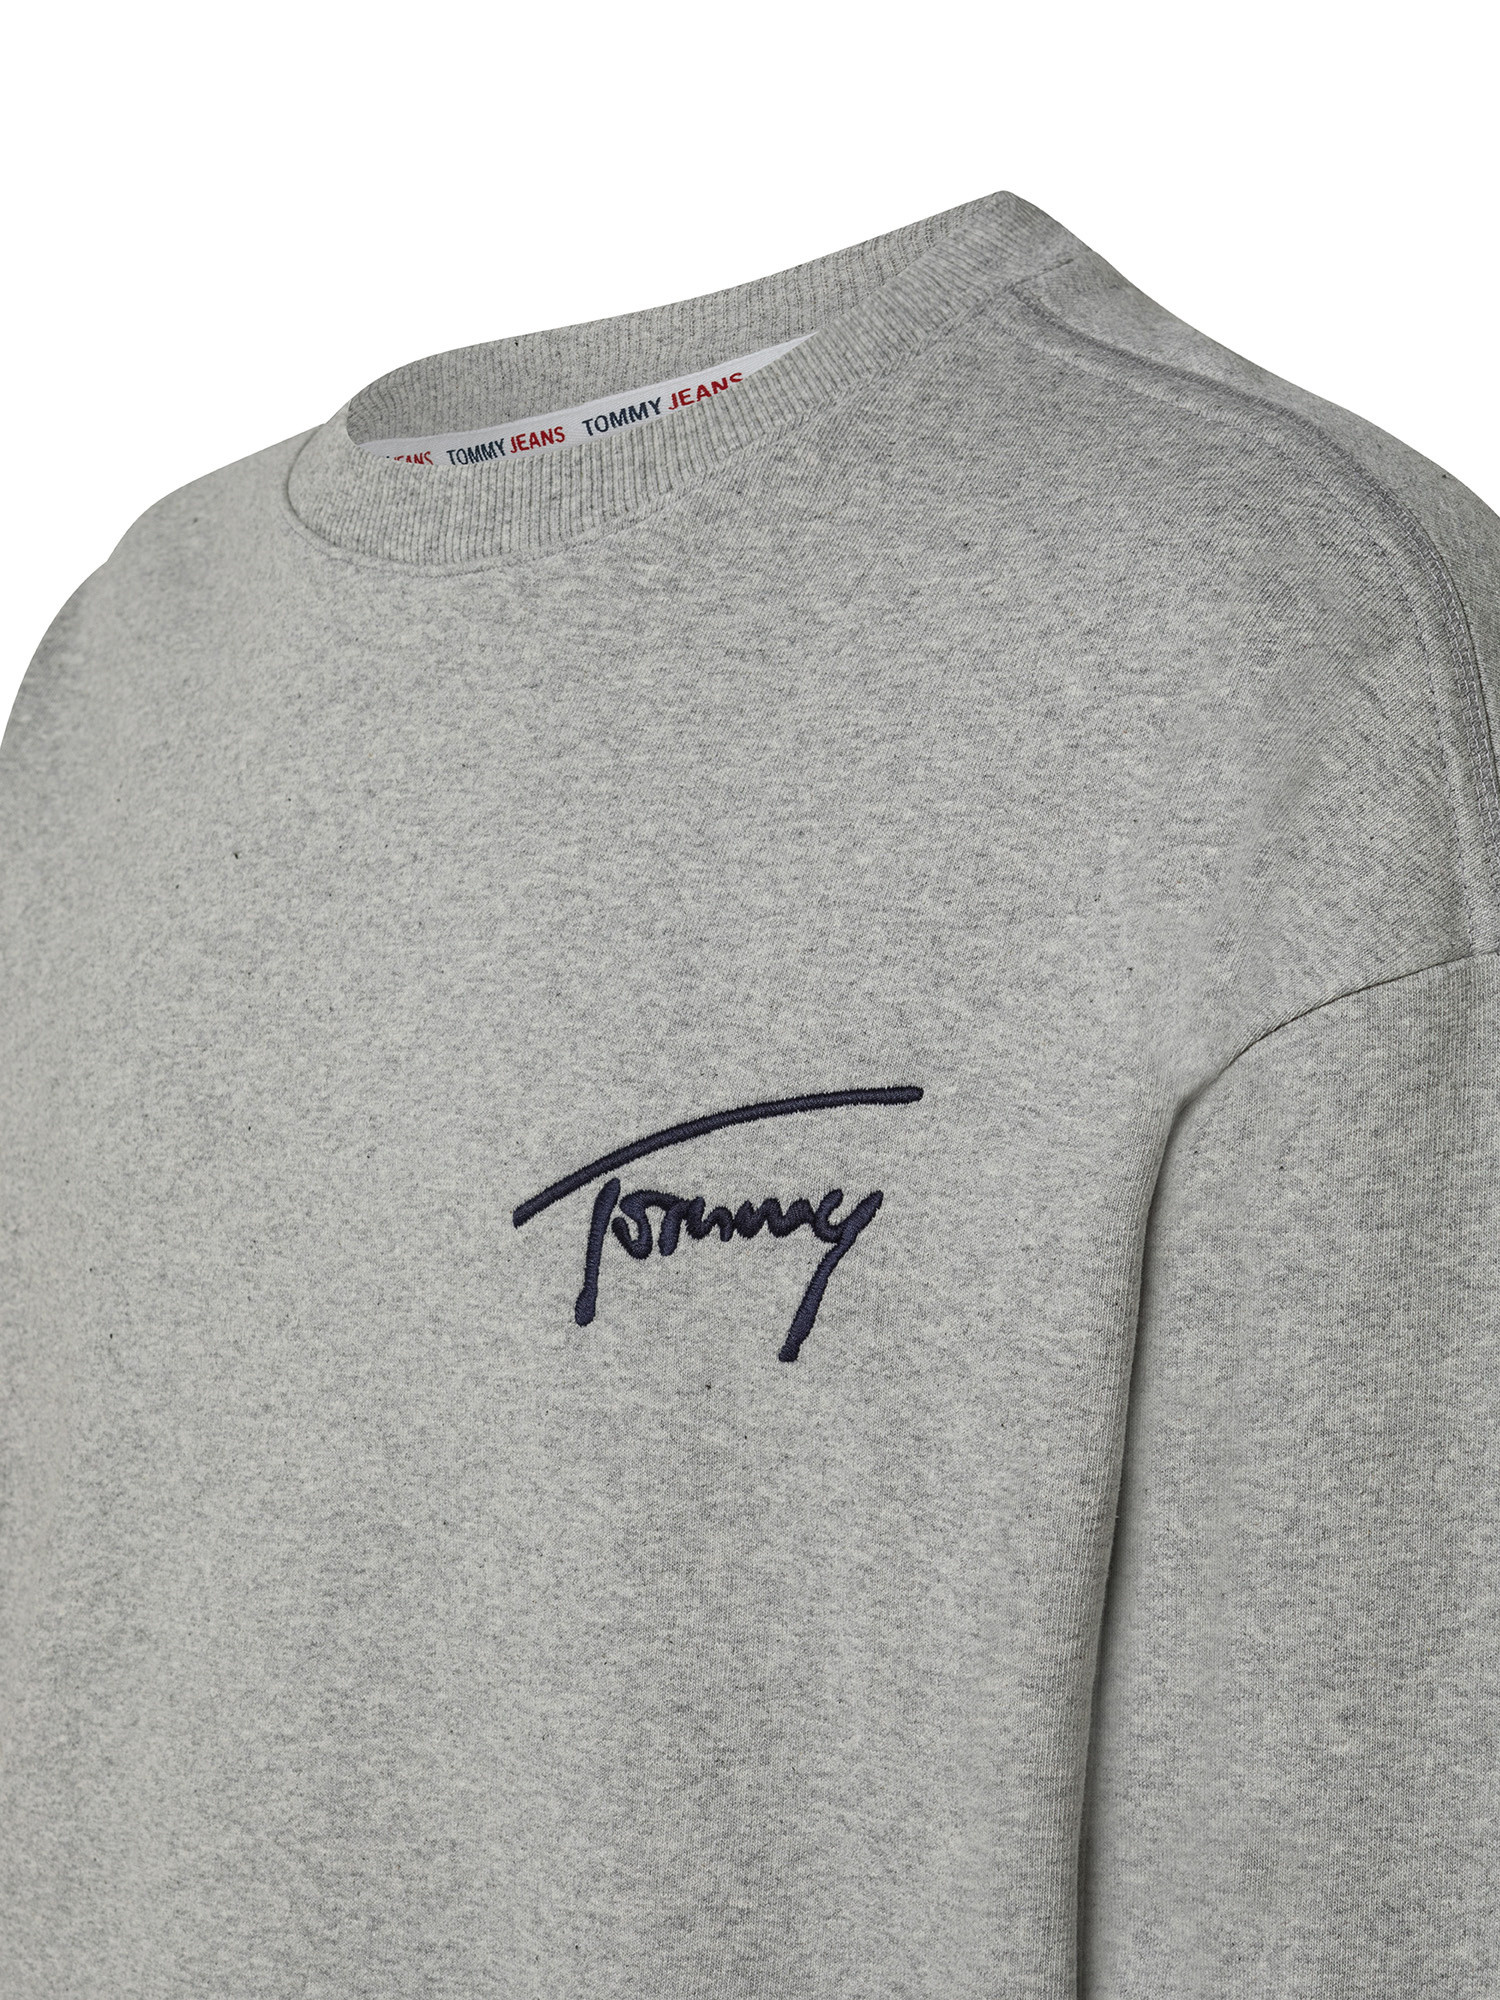 Tommy Jeans - Felpa con logo signature, Grigio, large image number 2